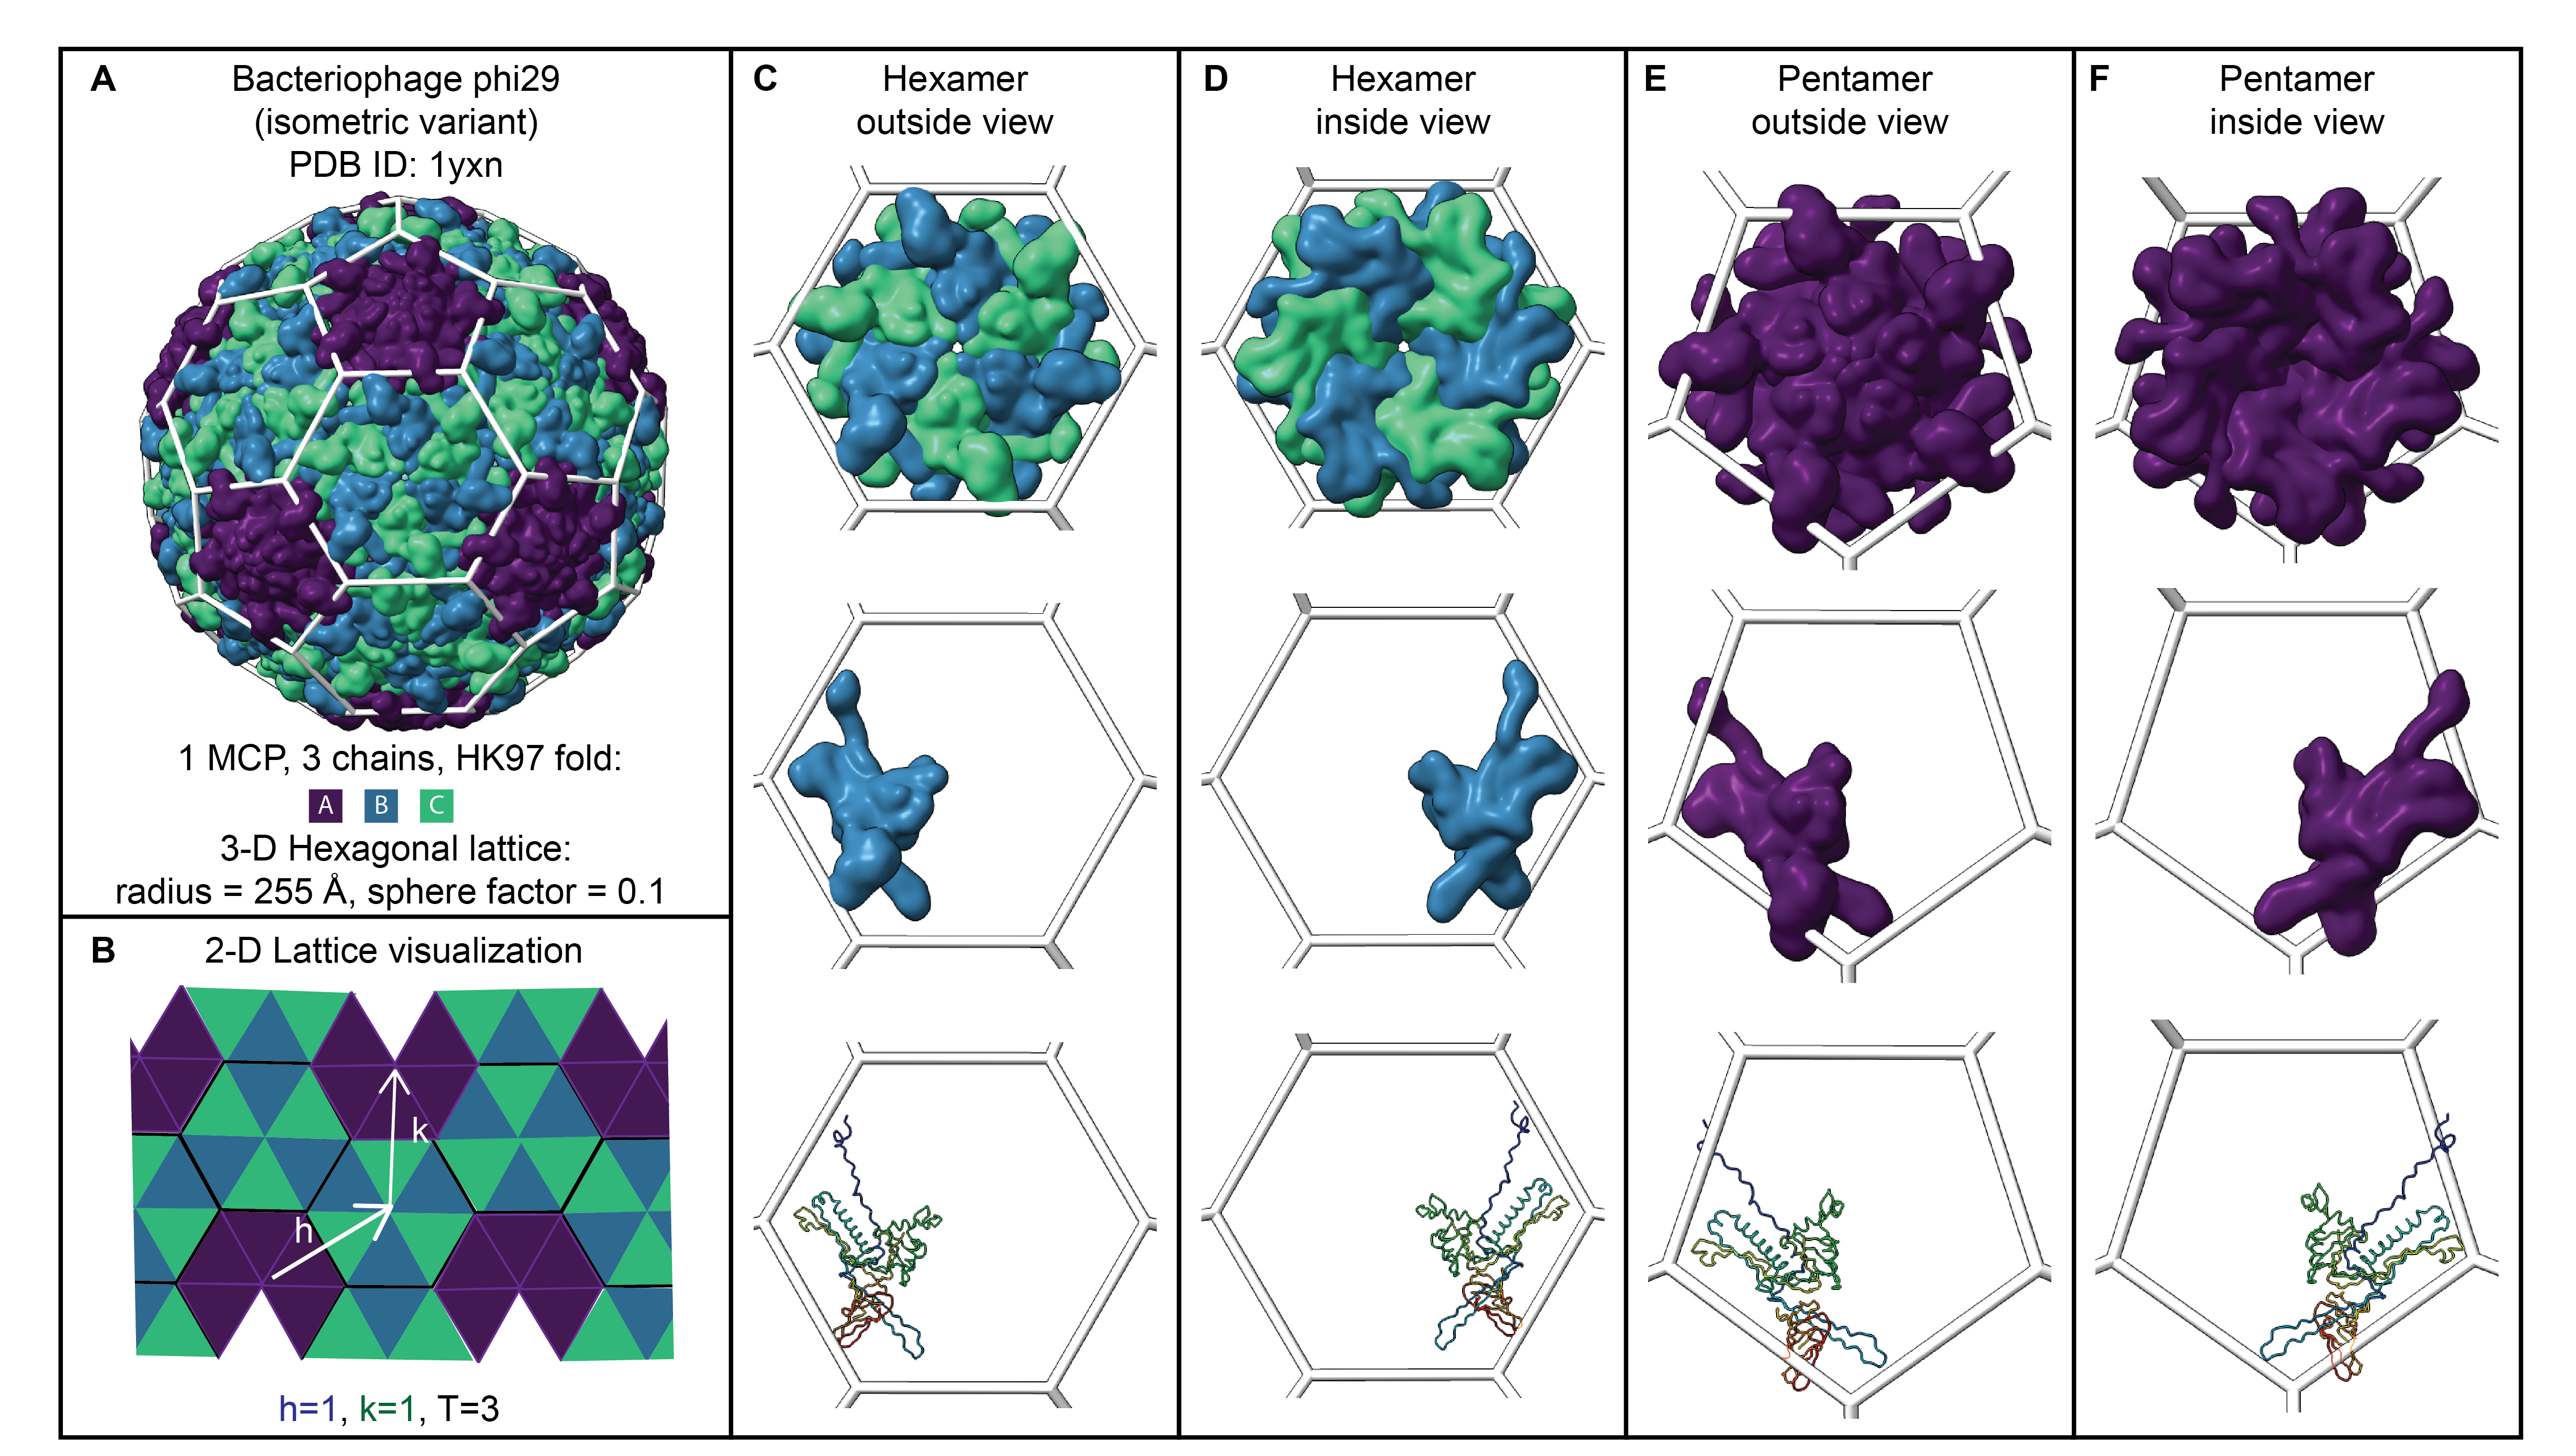 Bacteriophage phi29 (isometric variant